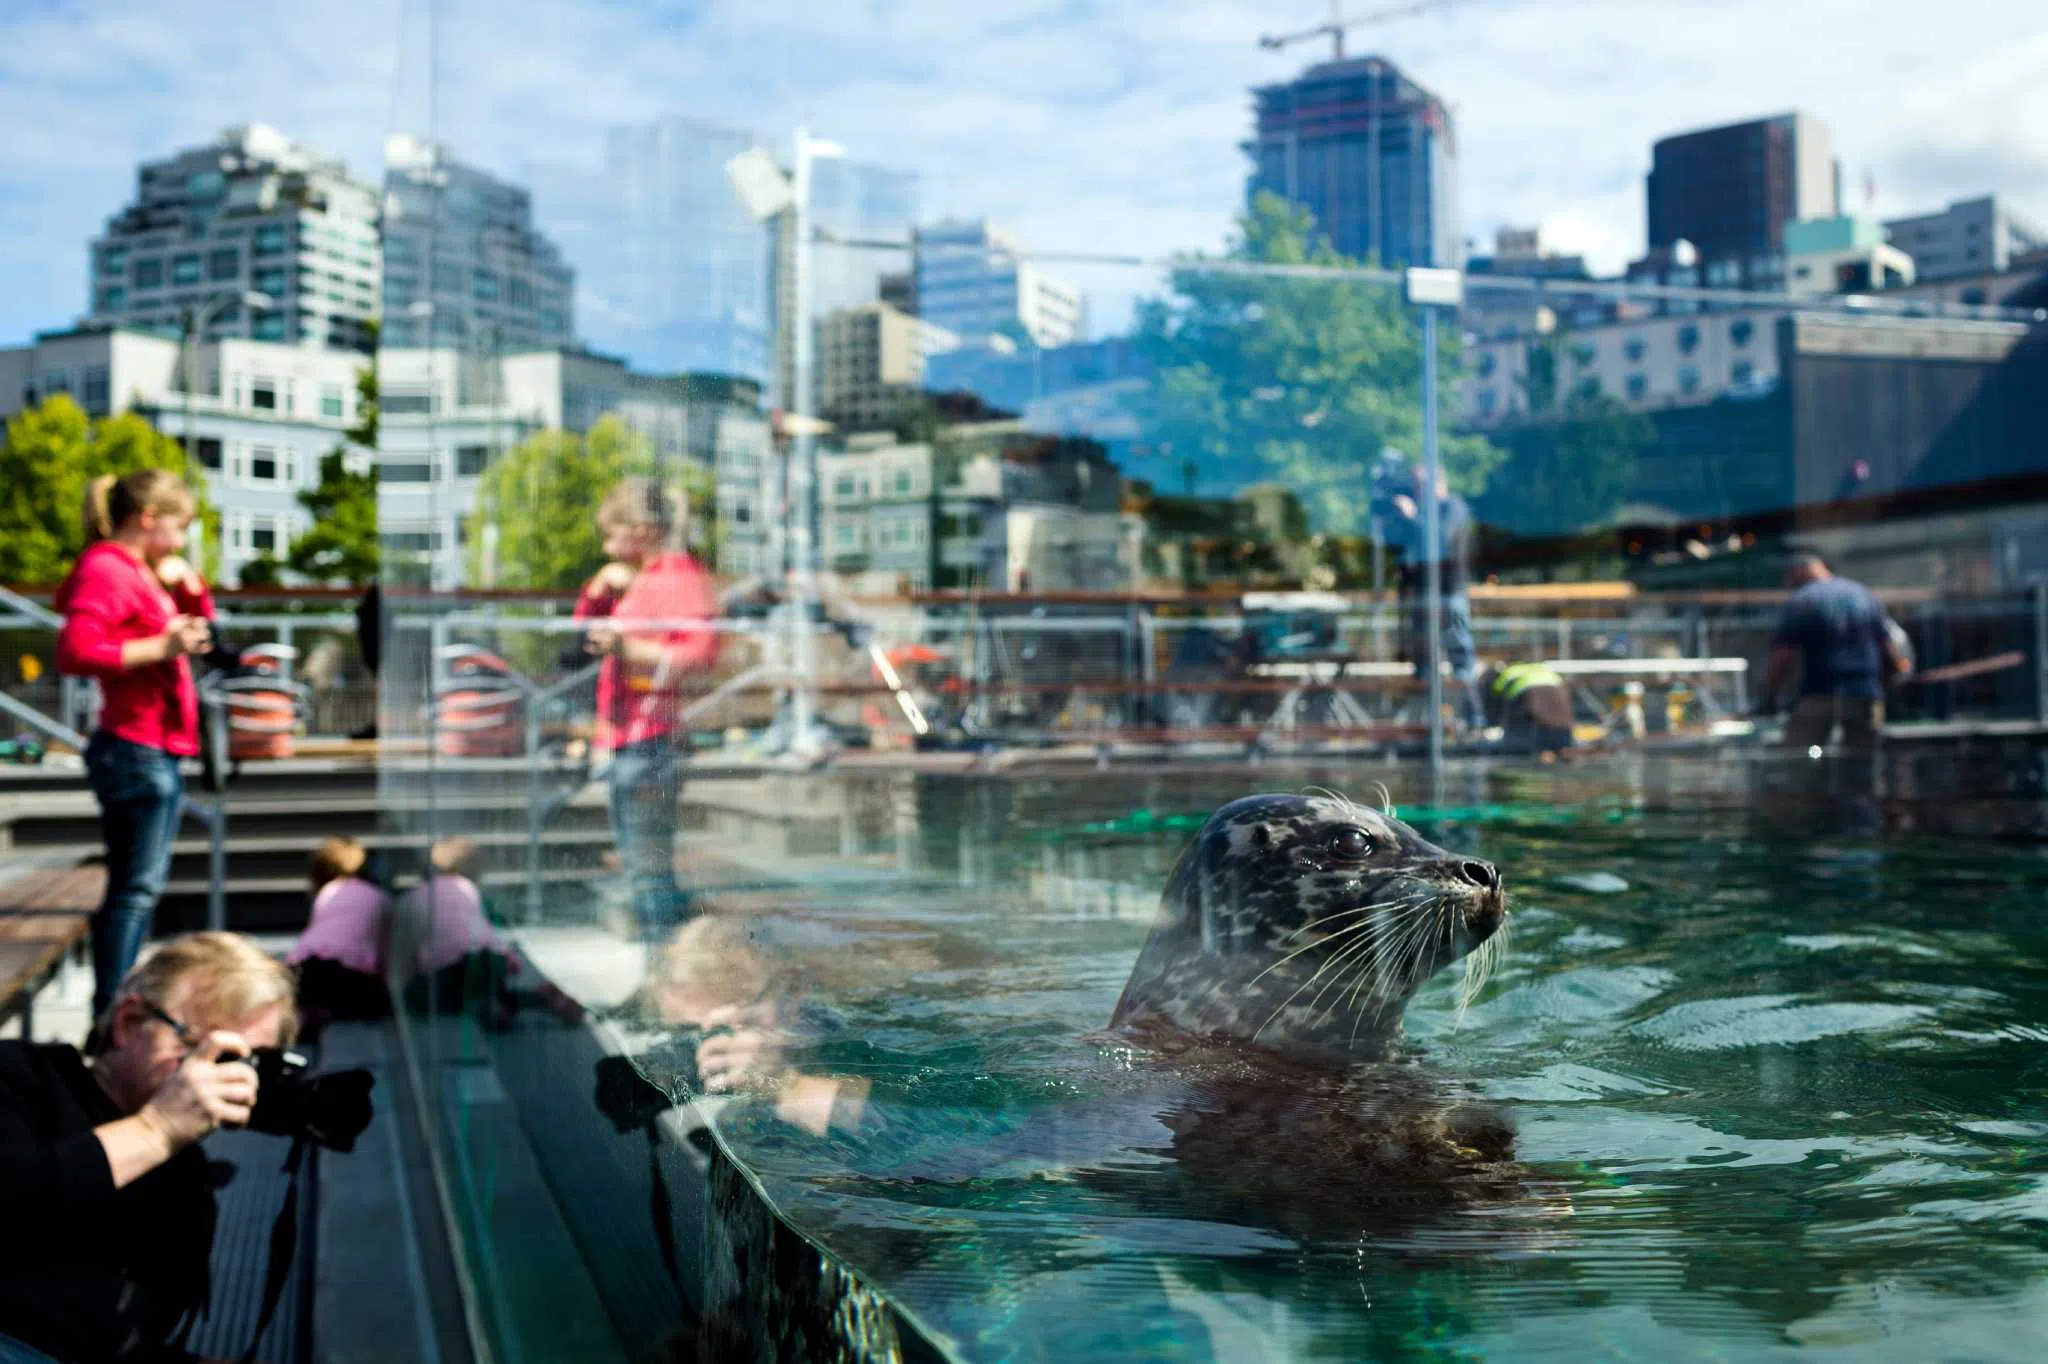 Seal showing at the aquarium